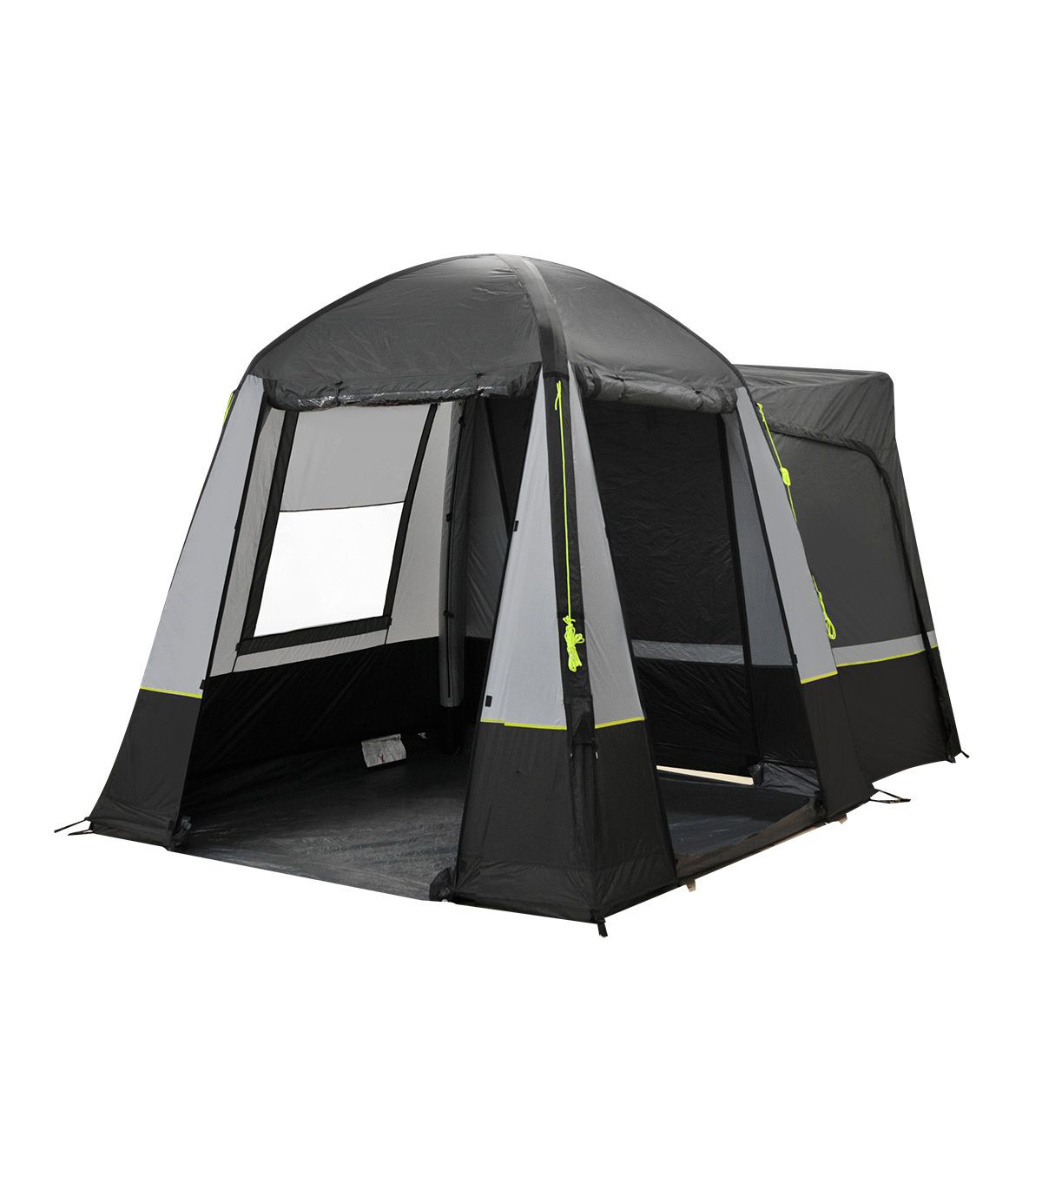 RV Tent